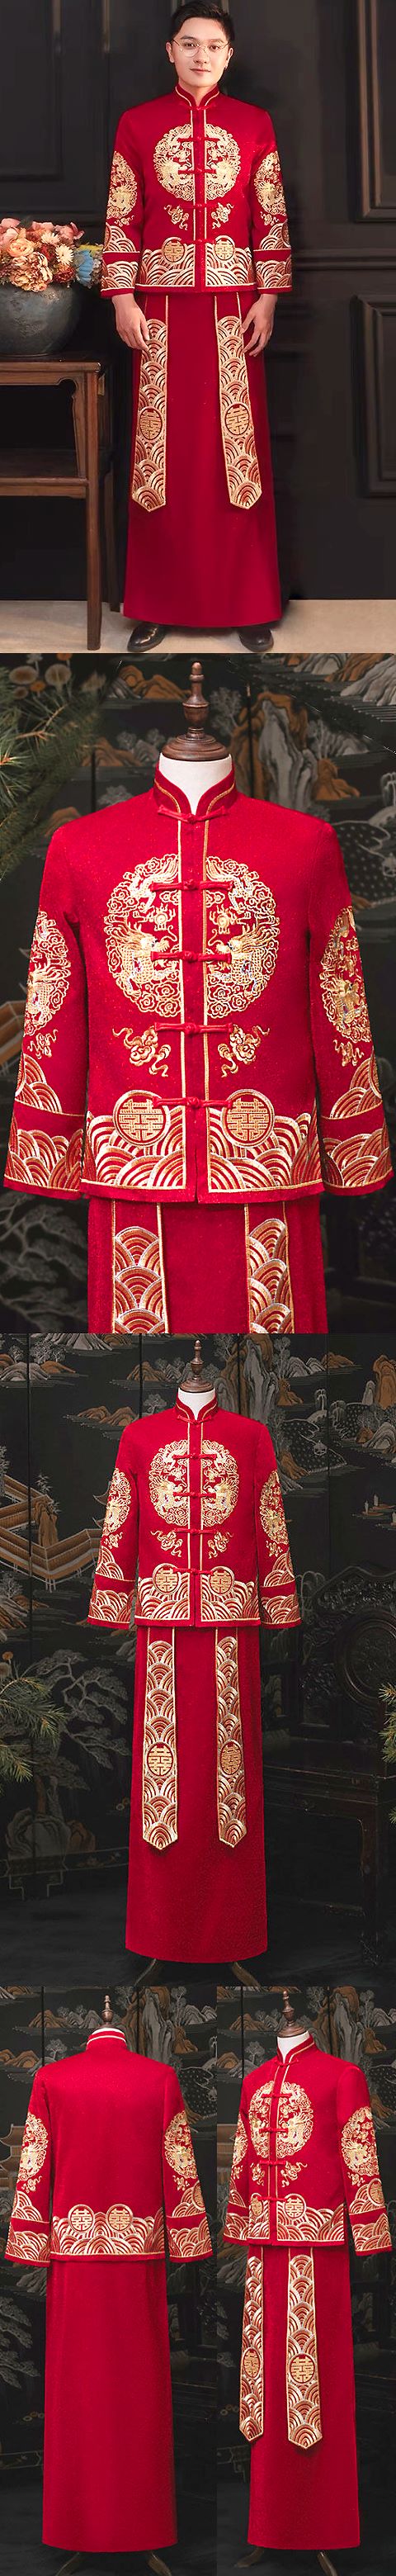 Archaic Dragon Embroidery Bridegroom Suit